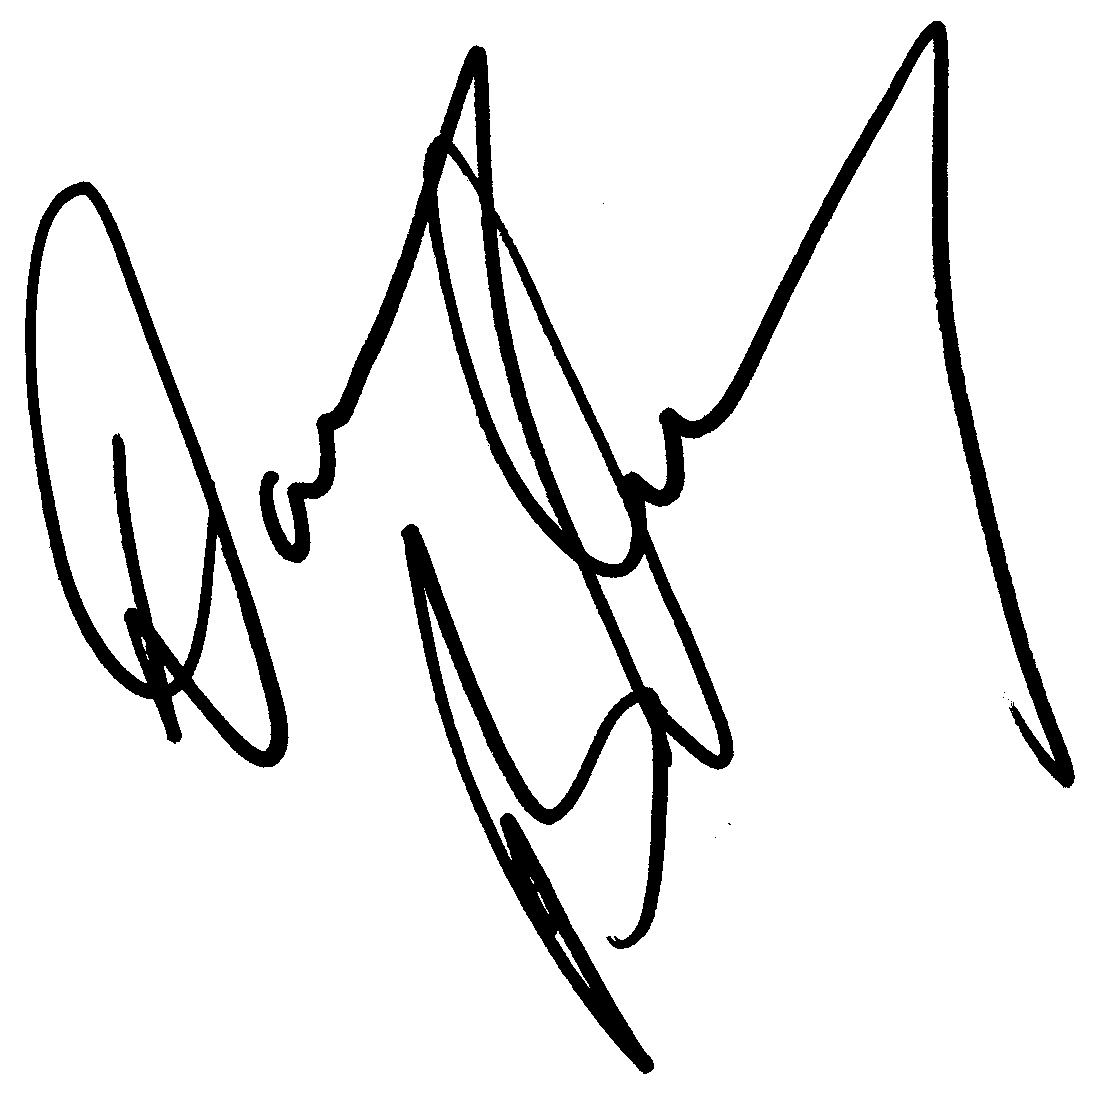 Danny Bonaduce autograph facsimile